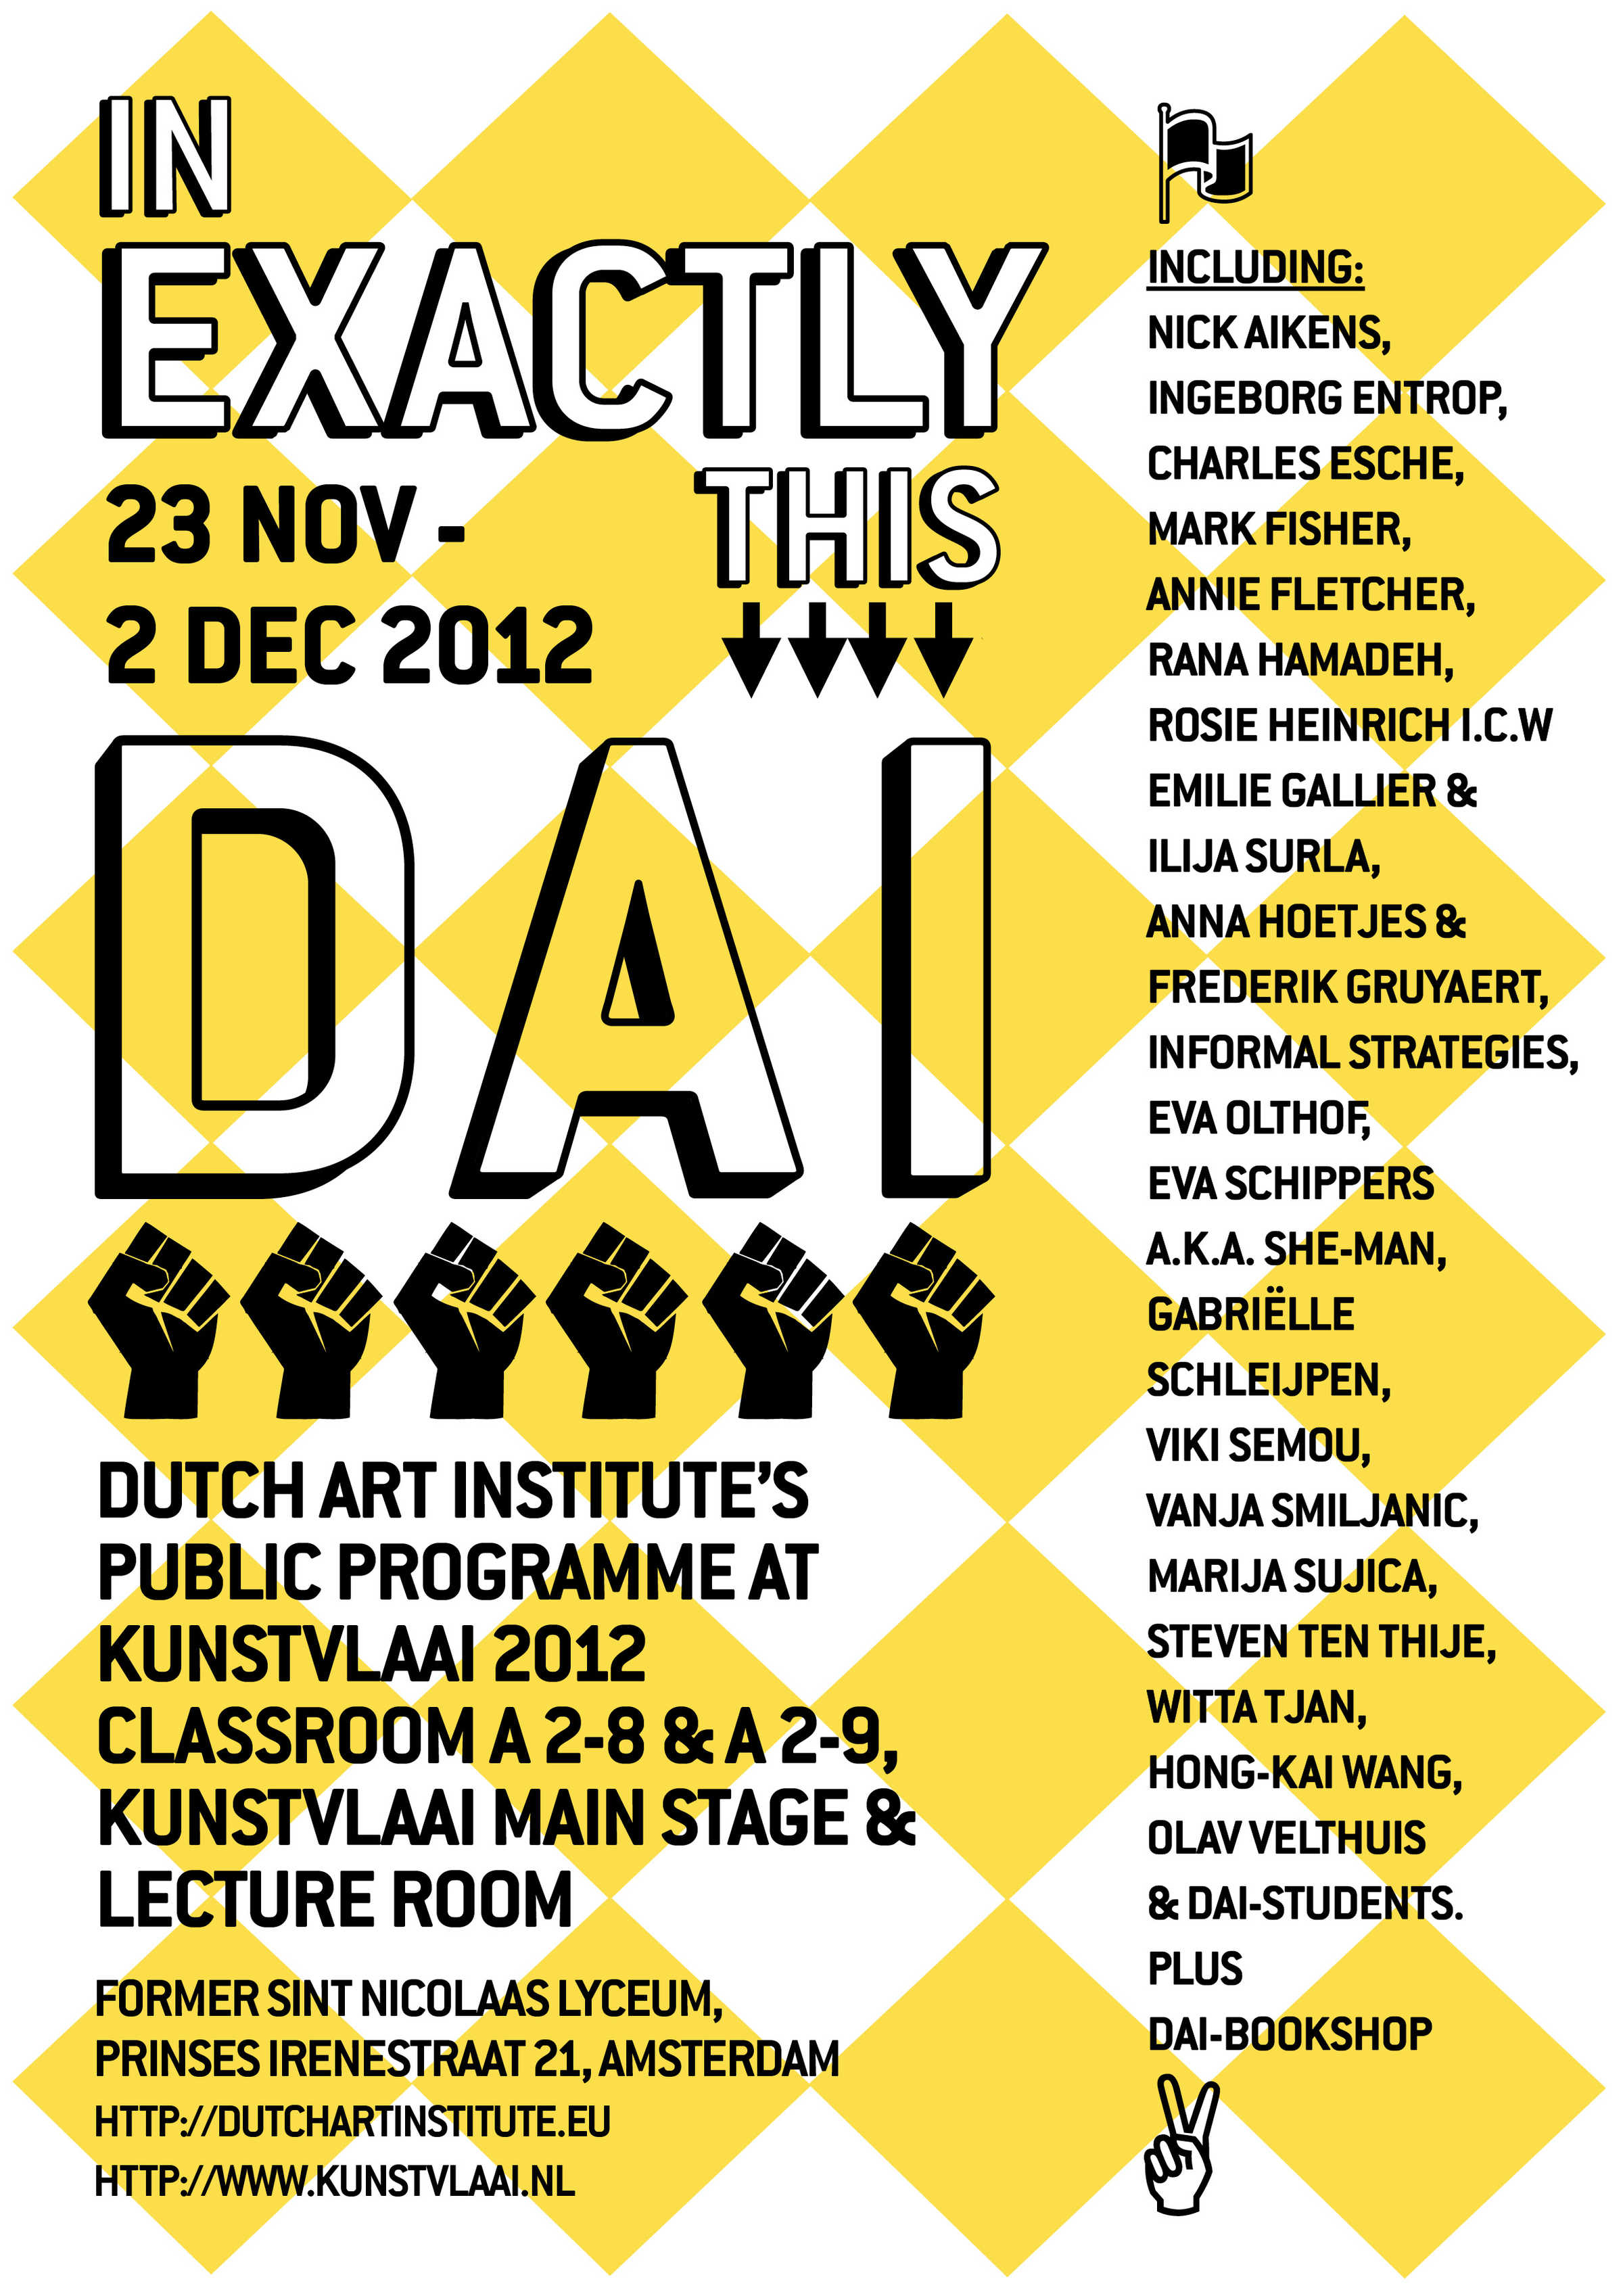 INexactlyTHIS / DAI at Kunstvlaai 2012